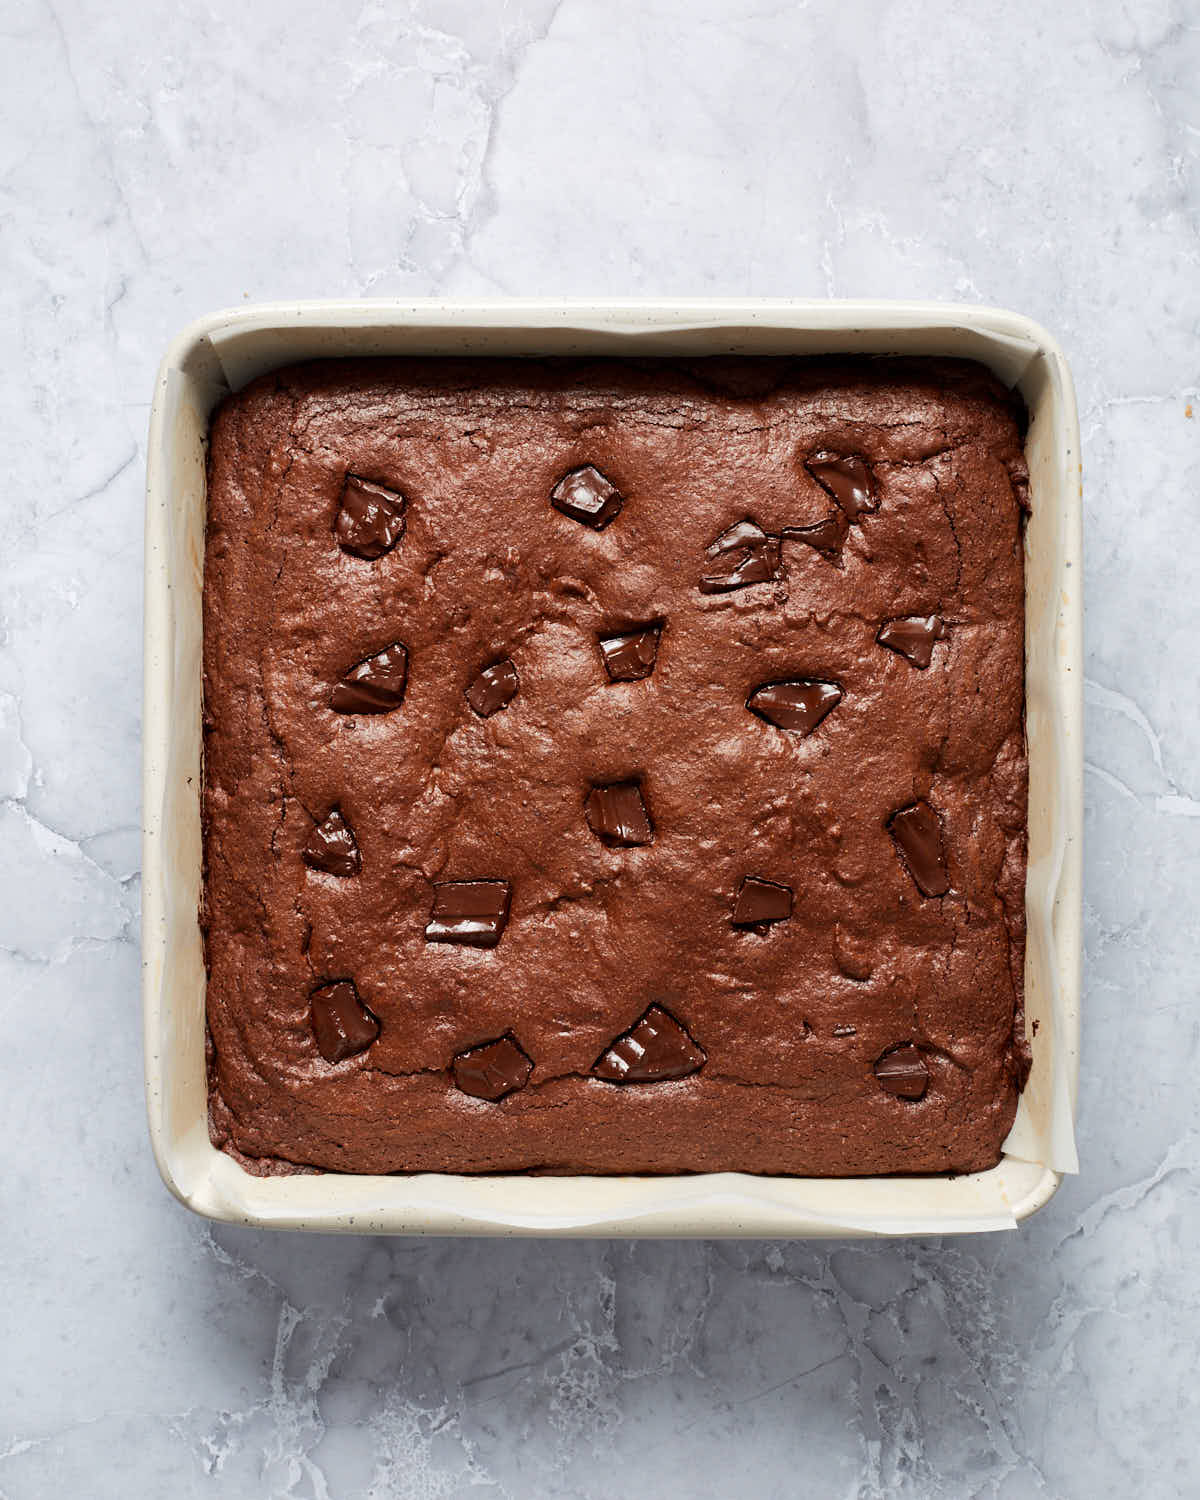 Uncut brownies in a square baking pan.